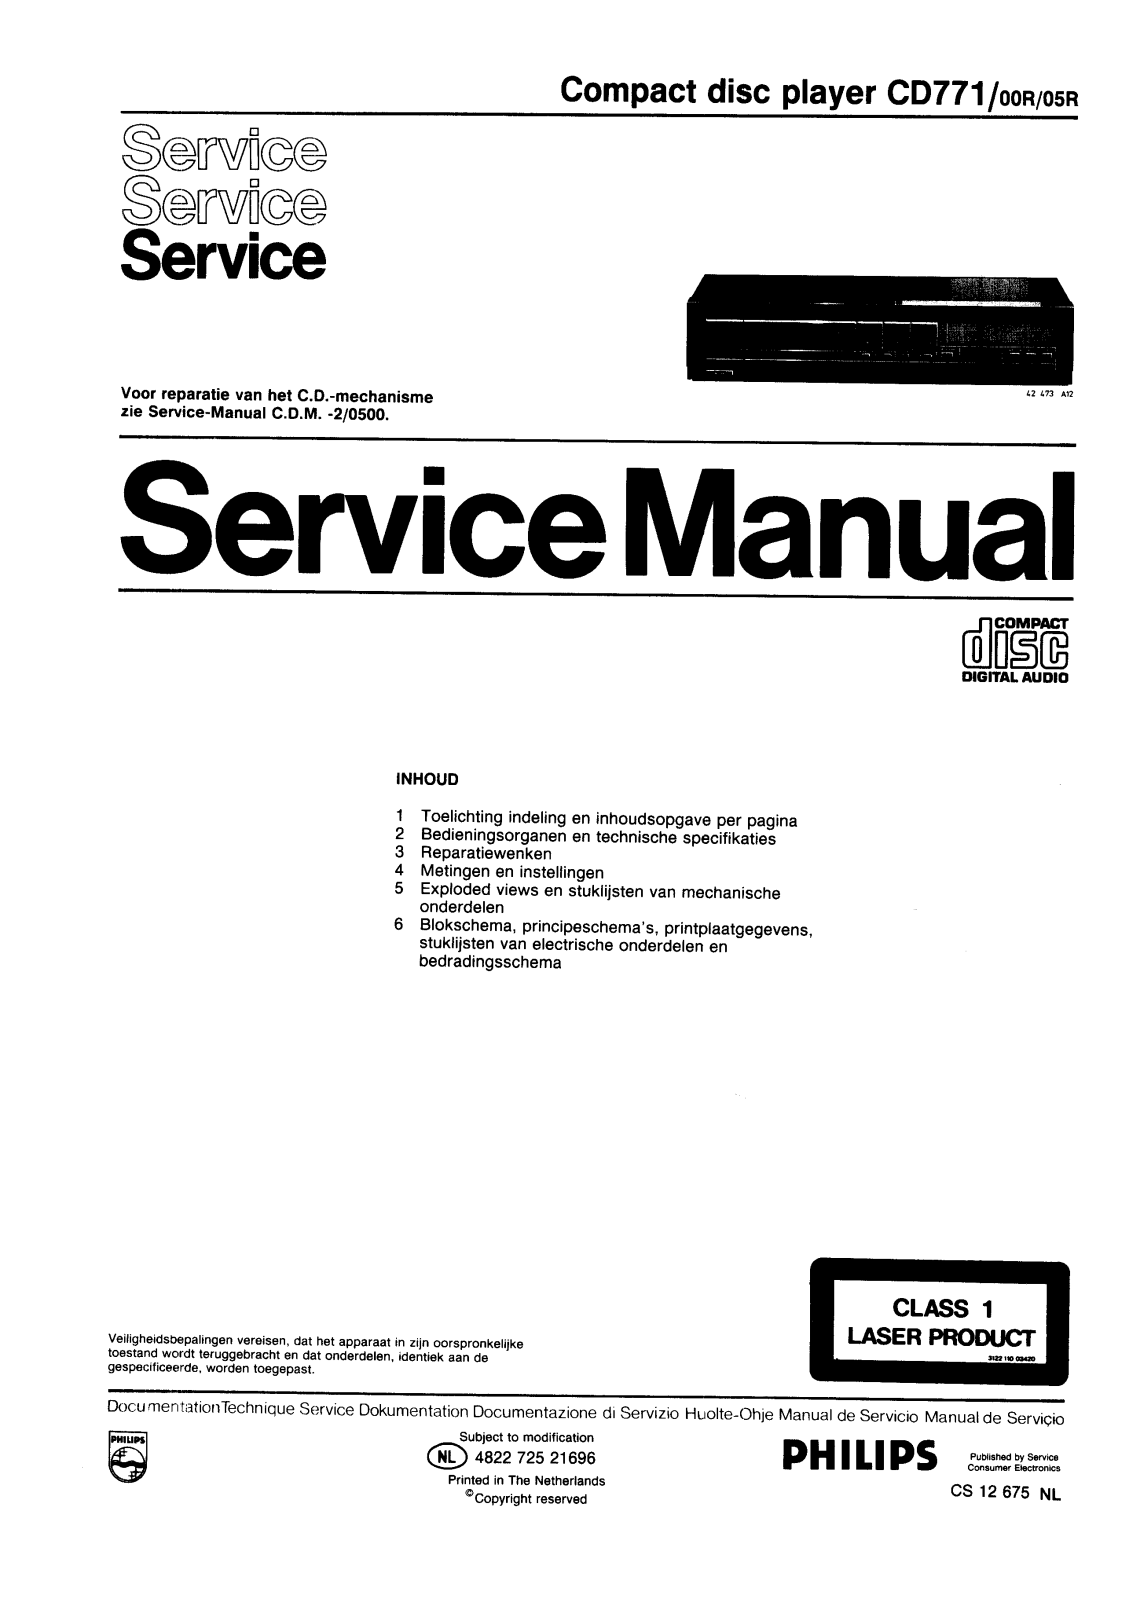 Philips CD-771 Service manual